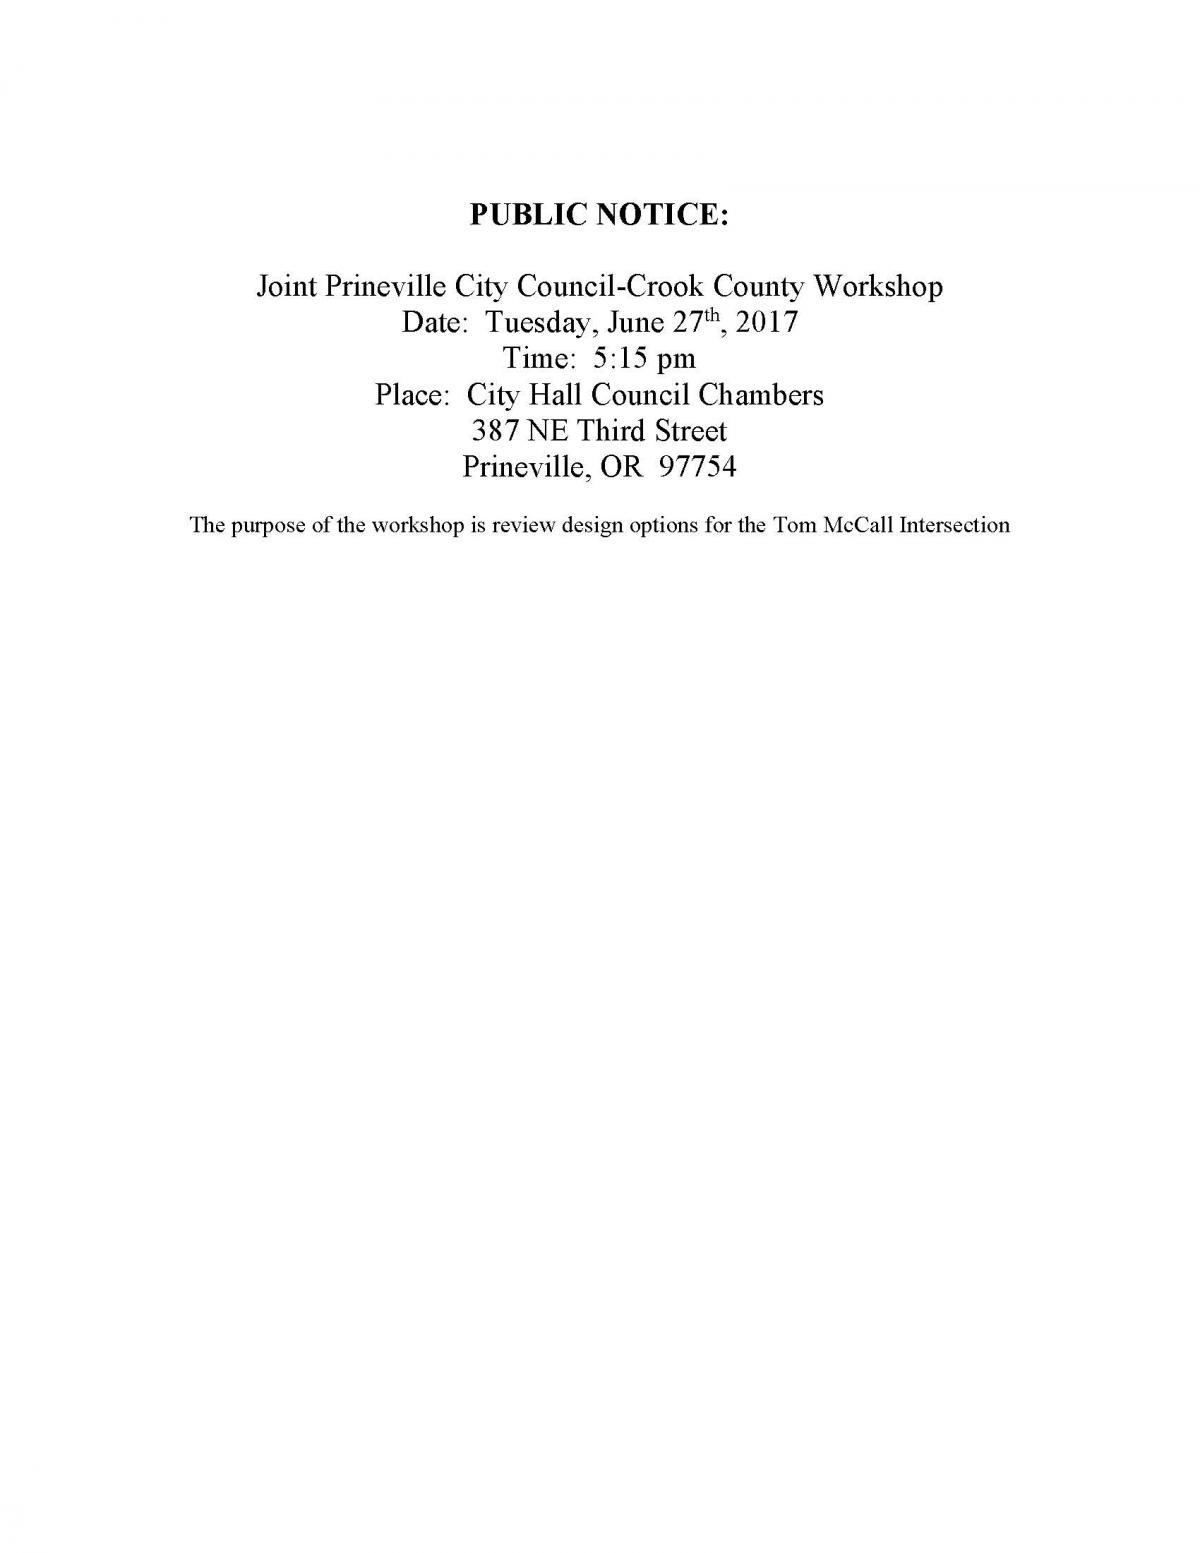 Public Notice 6-27-17 City-County Joint Workshop